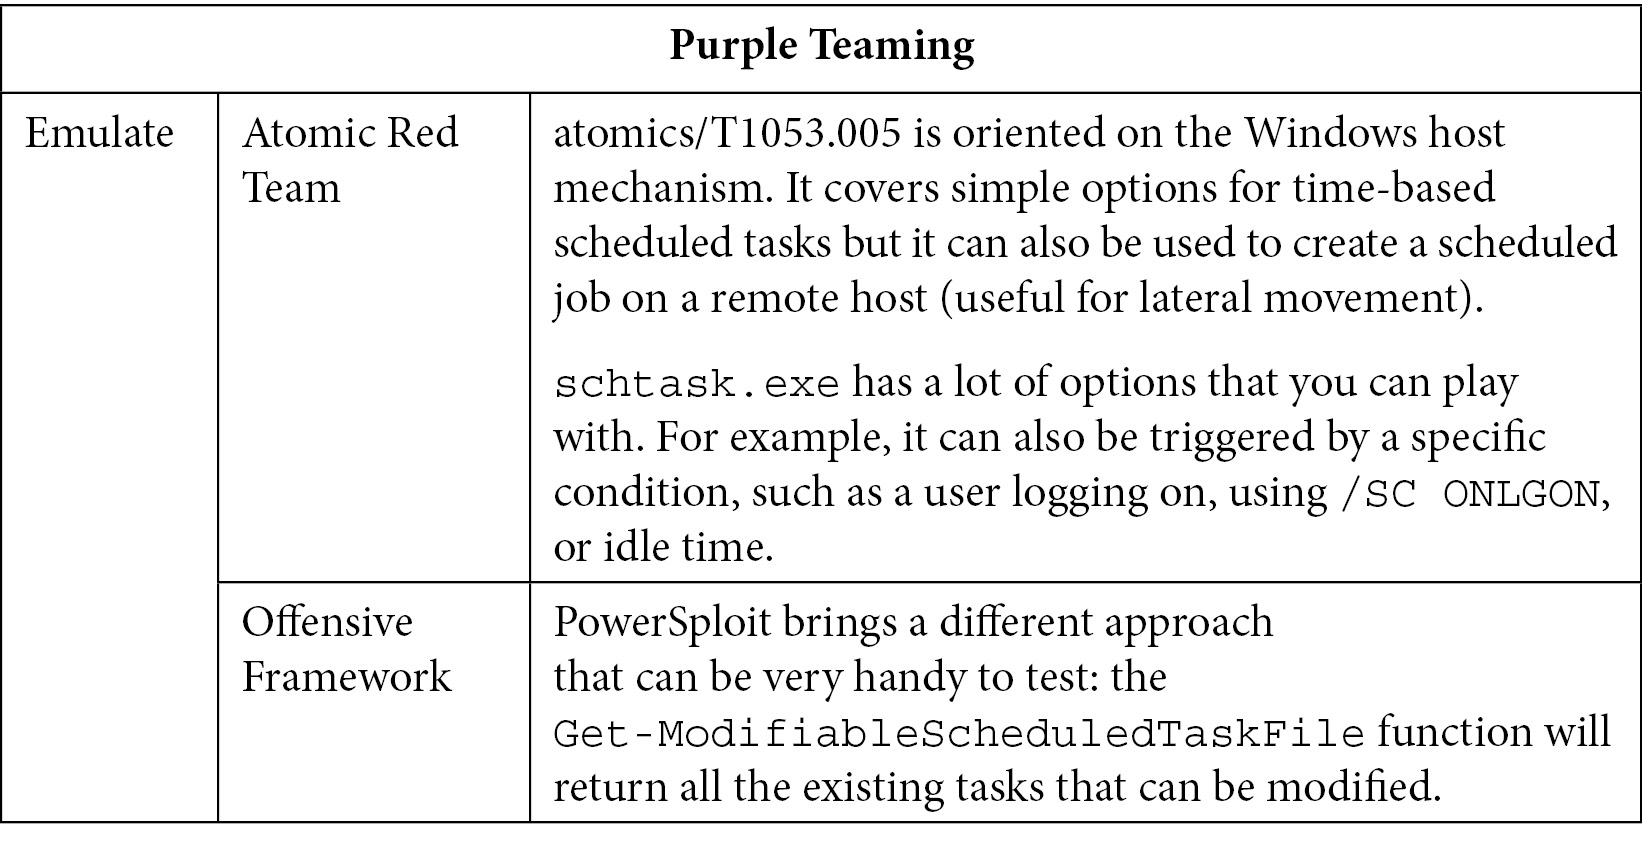 Table 10.5 – Purple Teaming T1053
